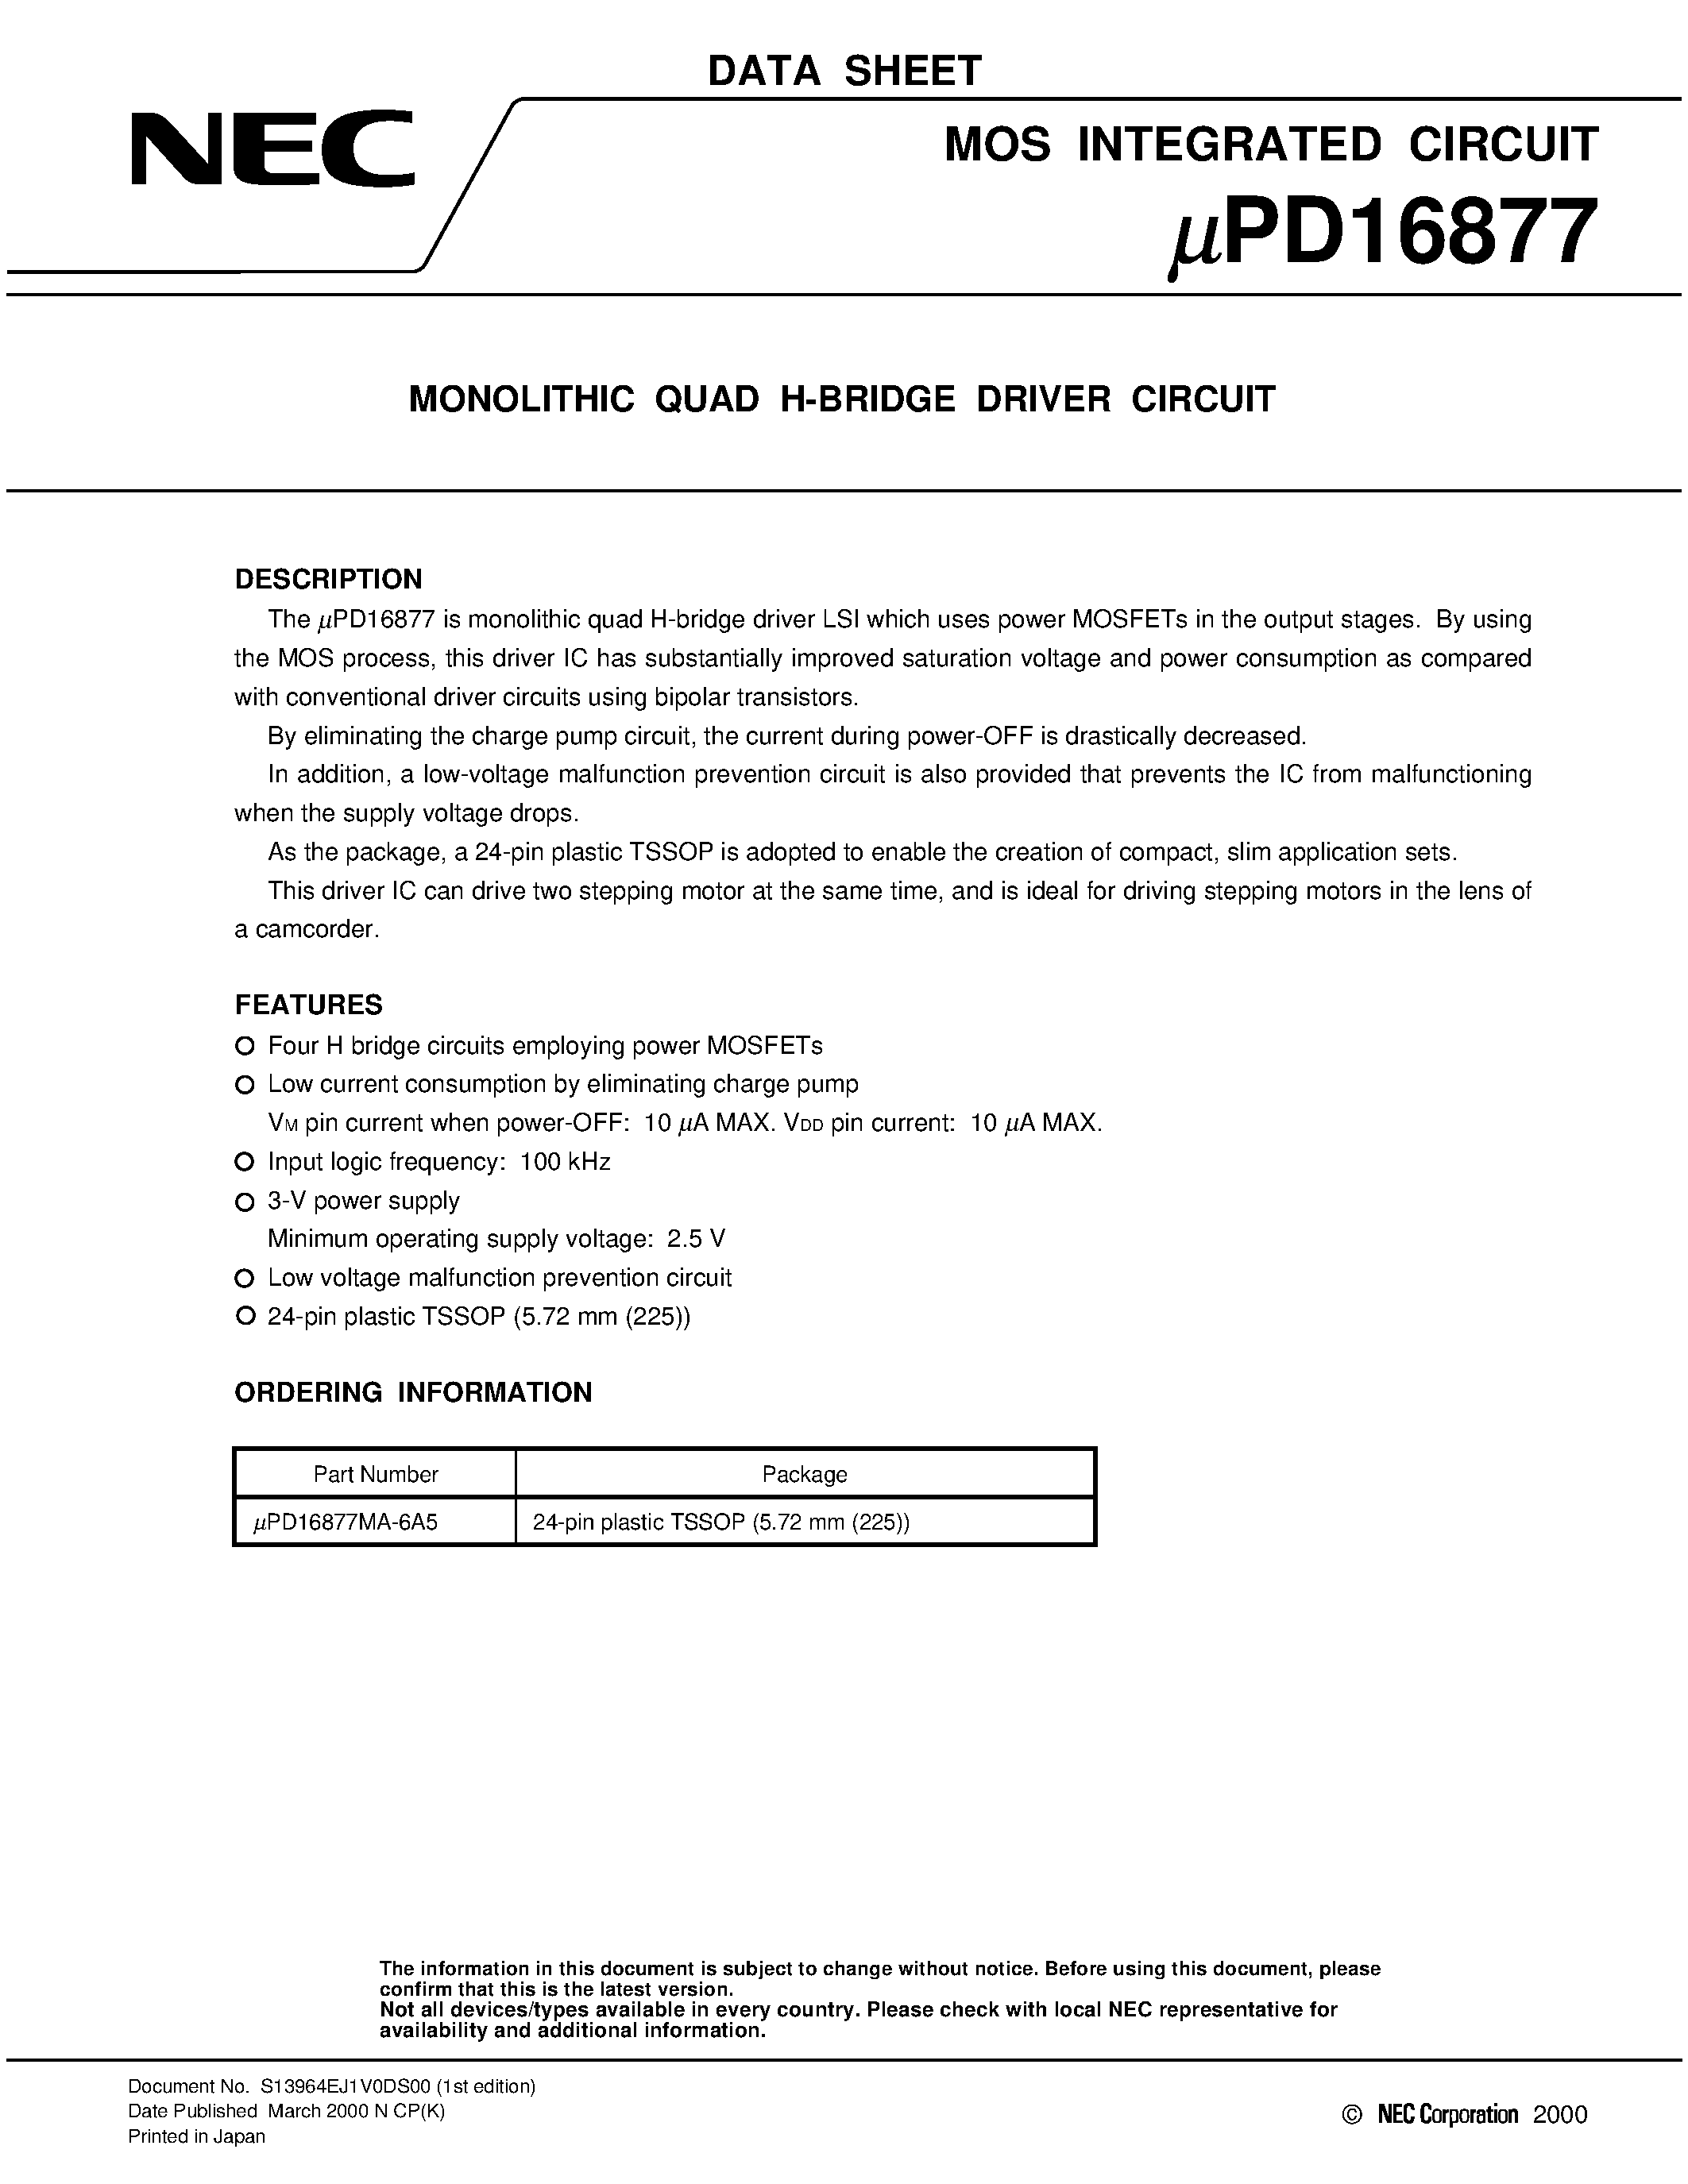 Datasheet UPD16877MA-6A5 - MONOLITHIC QUAD H-BRIDGE DRIVER CIRCUIT page 1